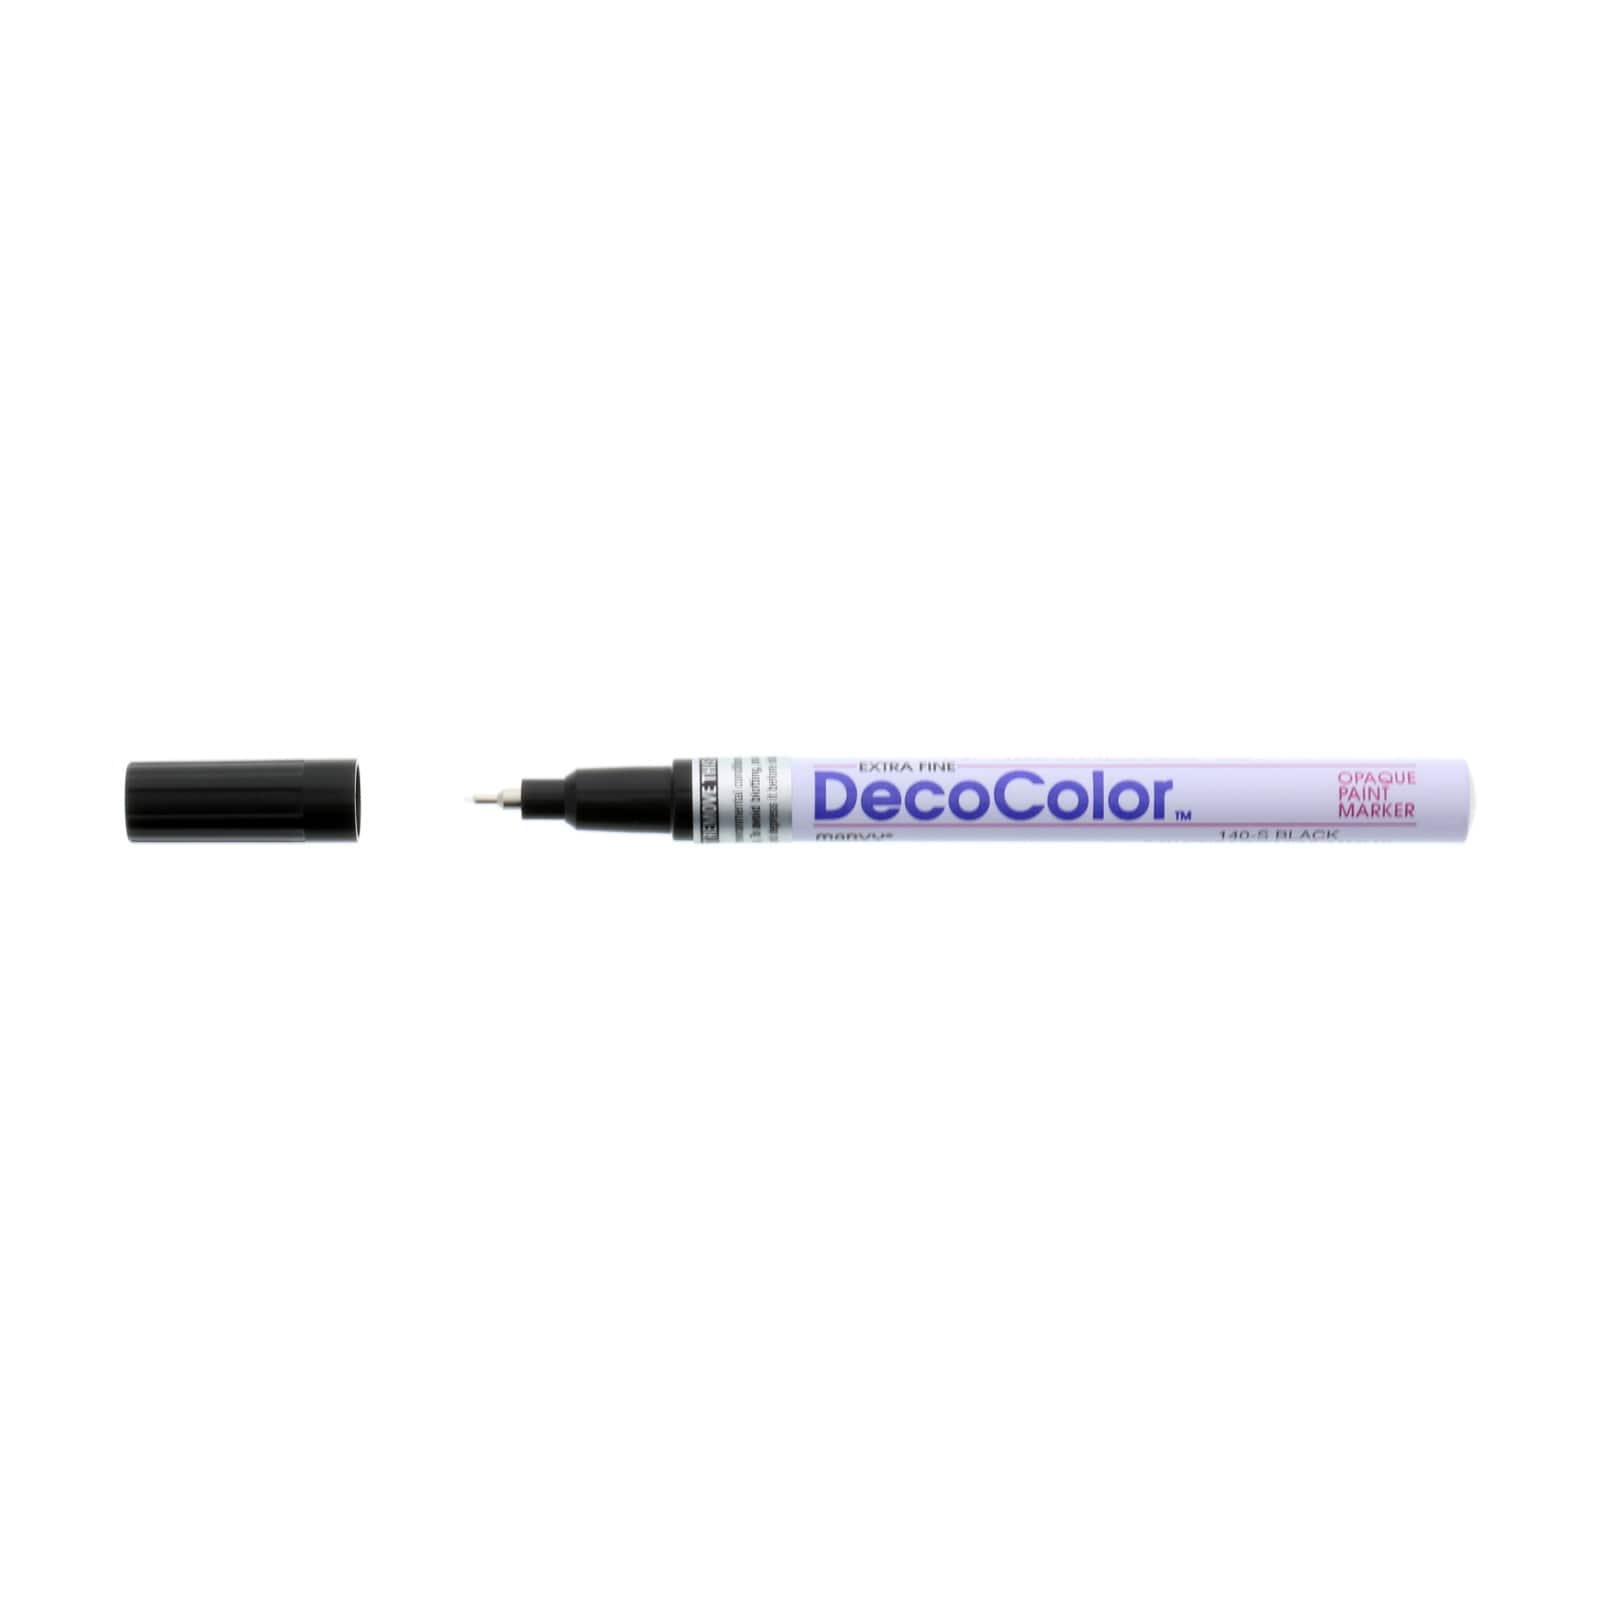 DecoColor Acrylic Paint Markers